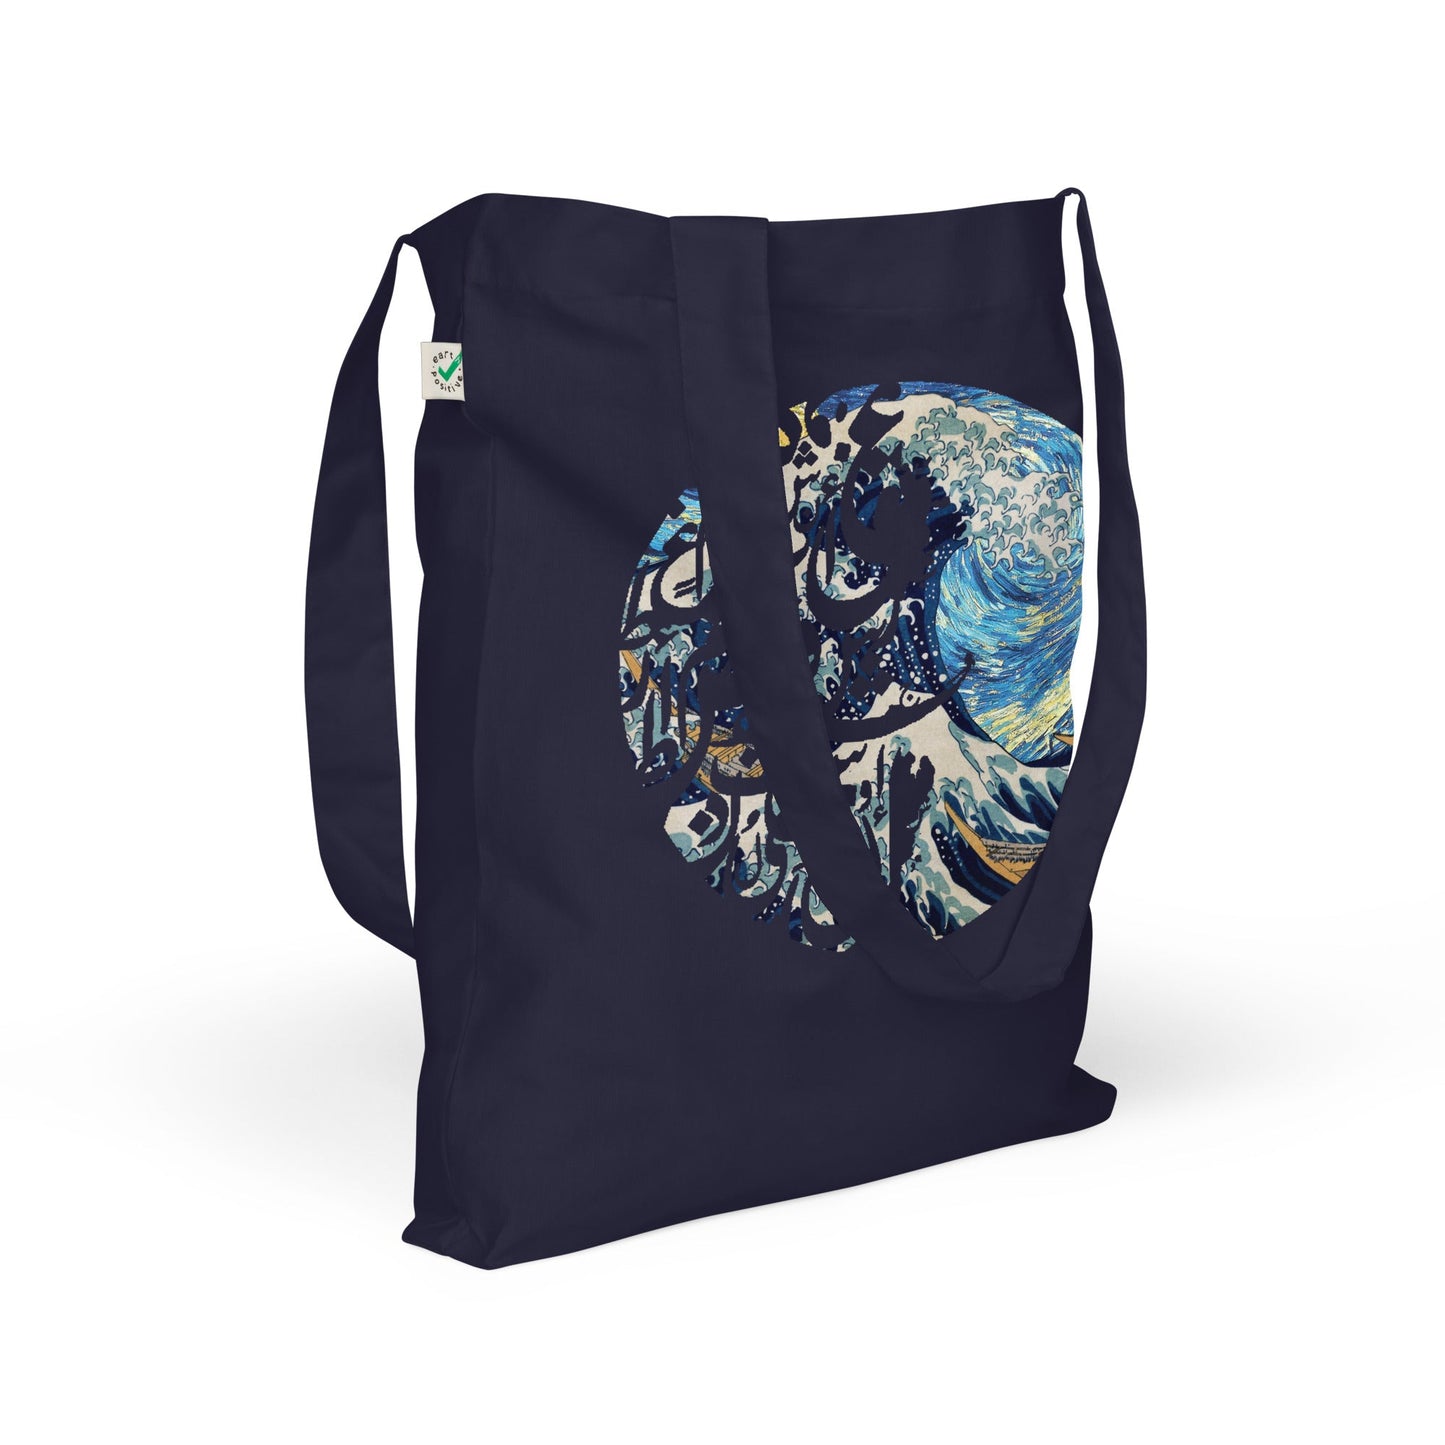 organic-fashion-tote-bag-modern-art-navy